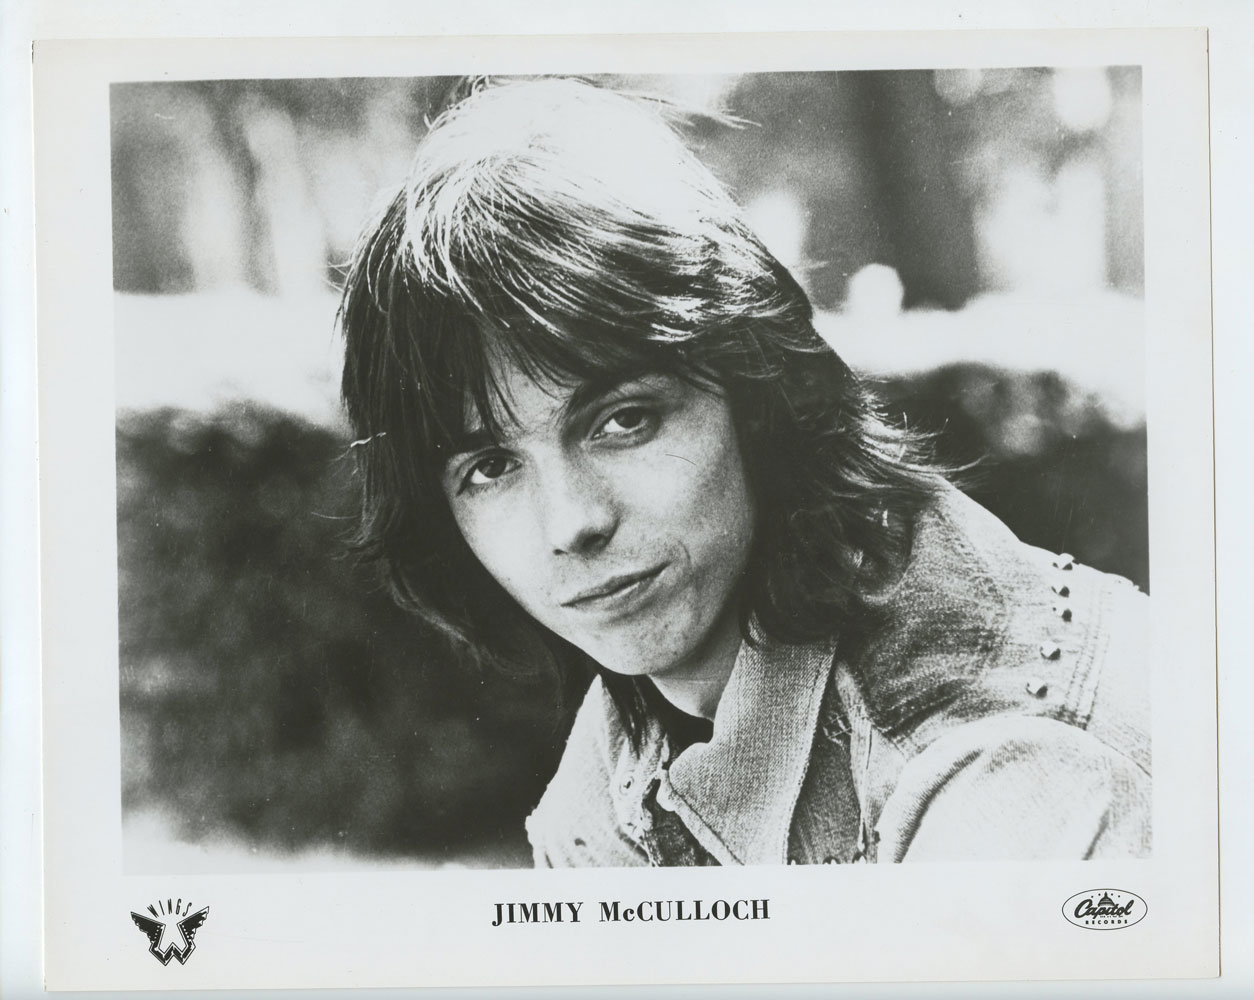 Jimmy McCulloch Photo 1971 Publicity Promo Capitol Records